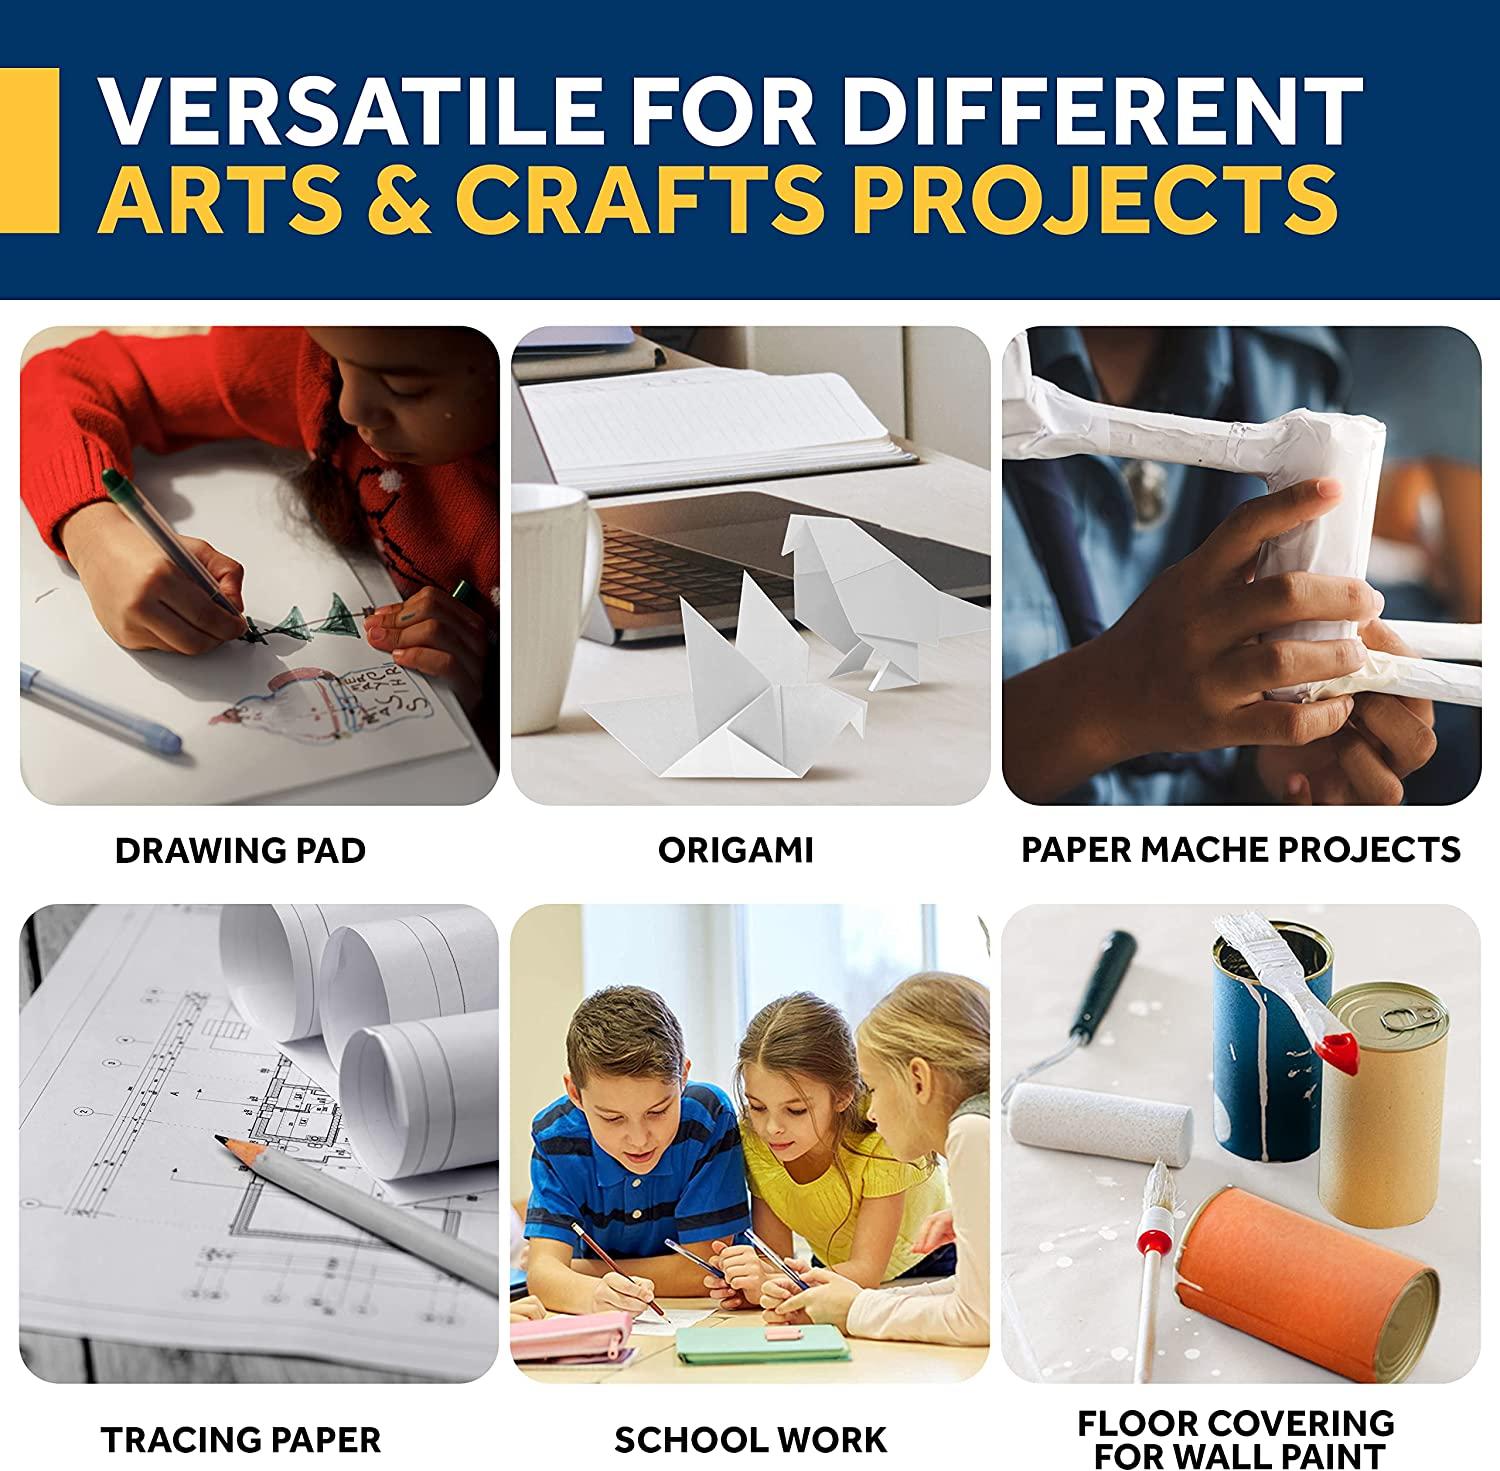 Easel Paper  United Art & Education